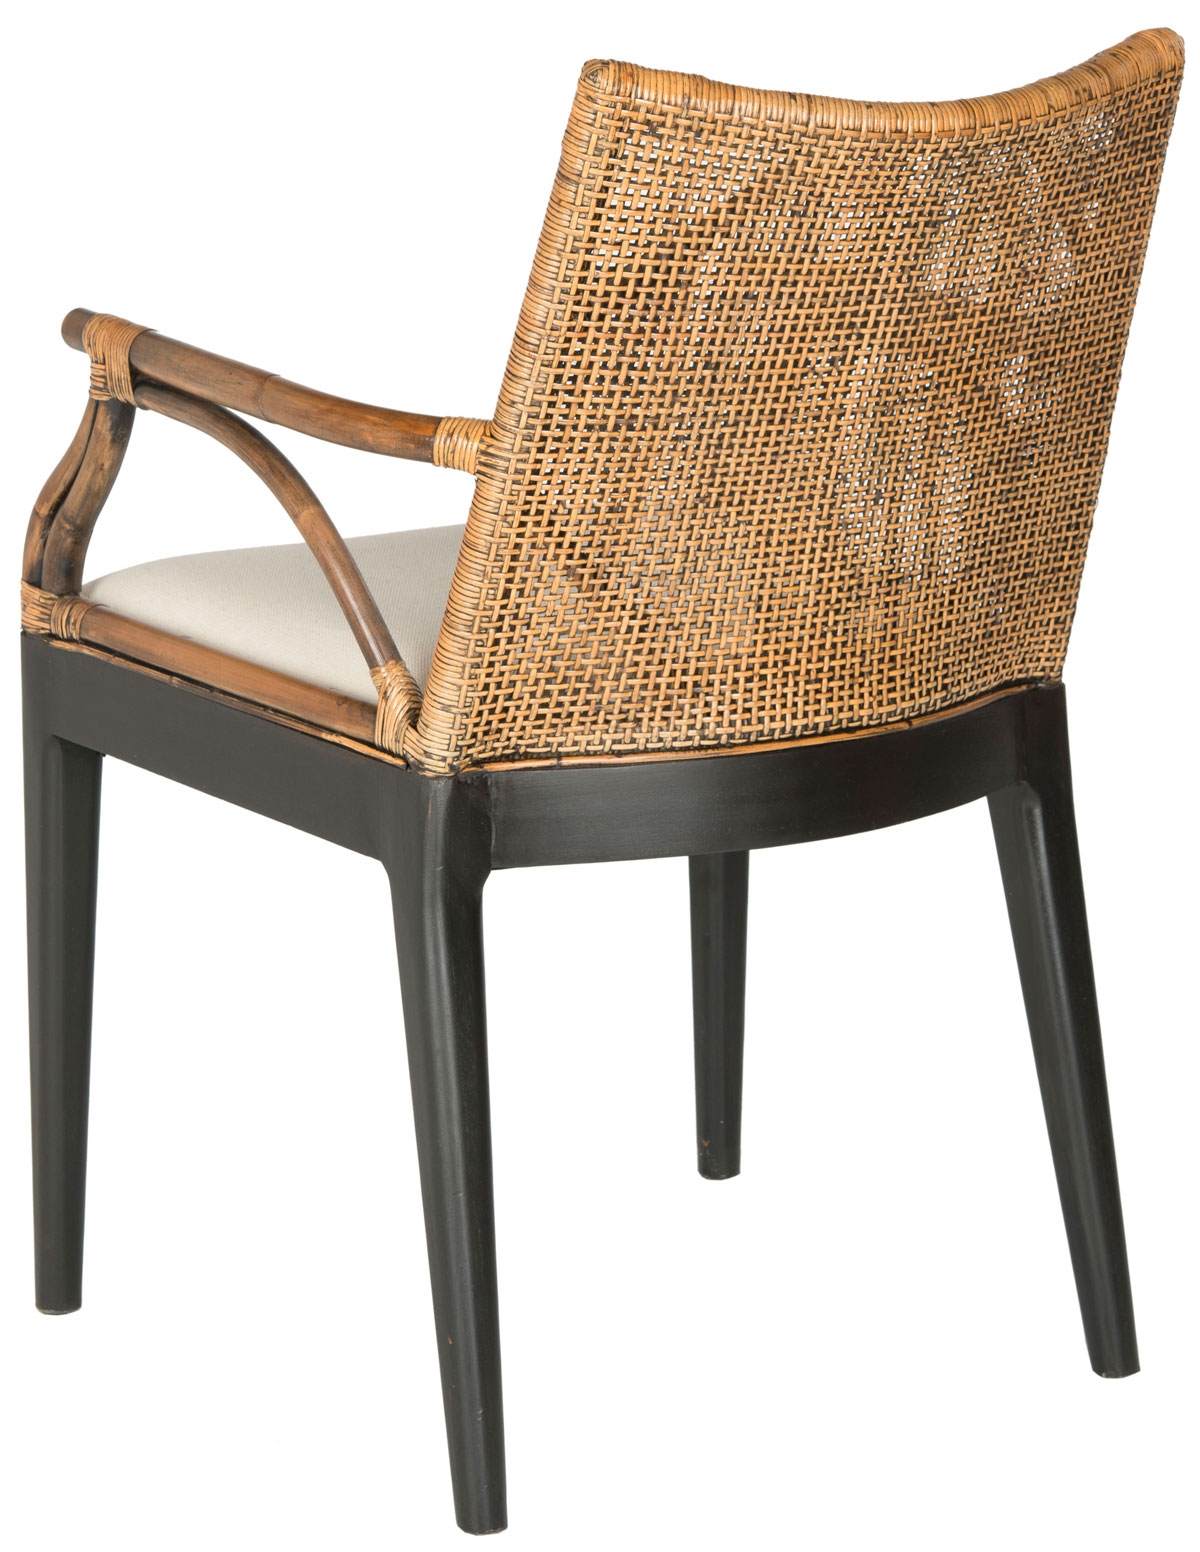 Gianni Arm Chair - Brown/White - Arlo Home - Image 2